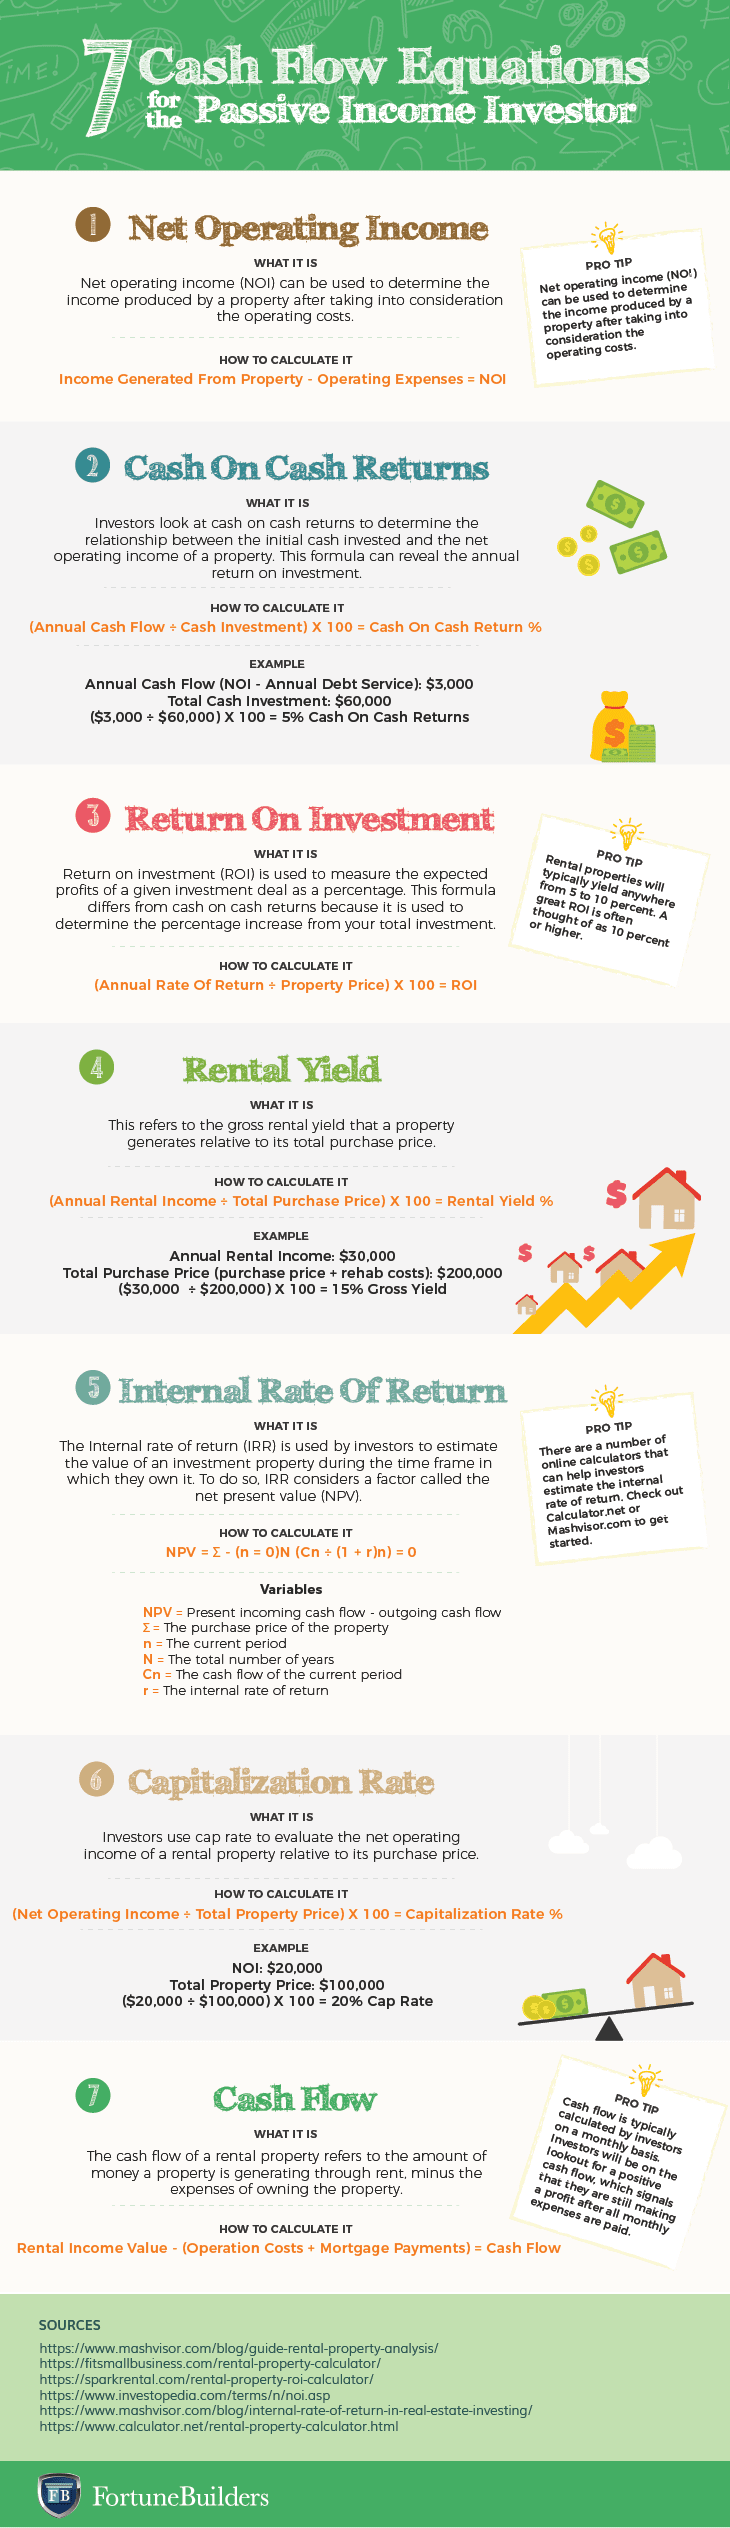 Rental property calculator infographic